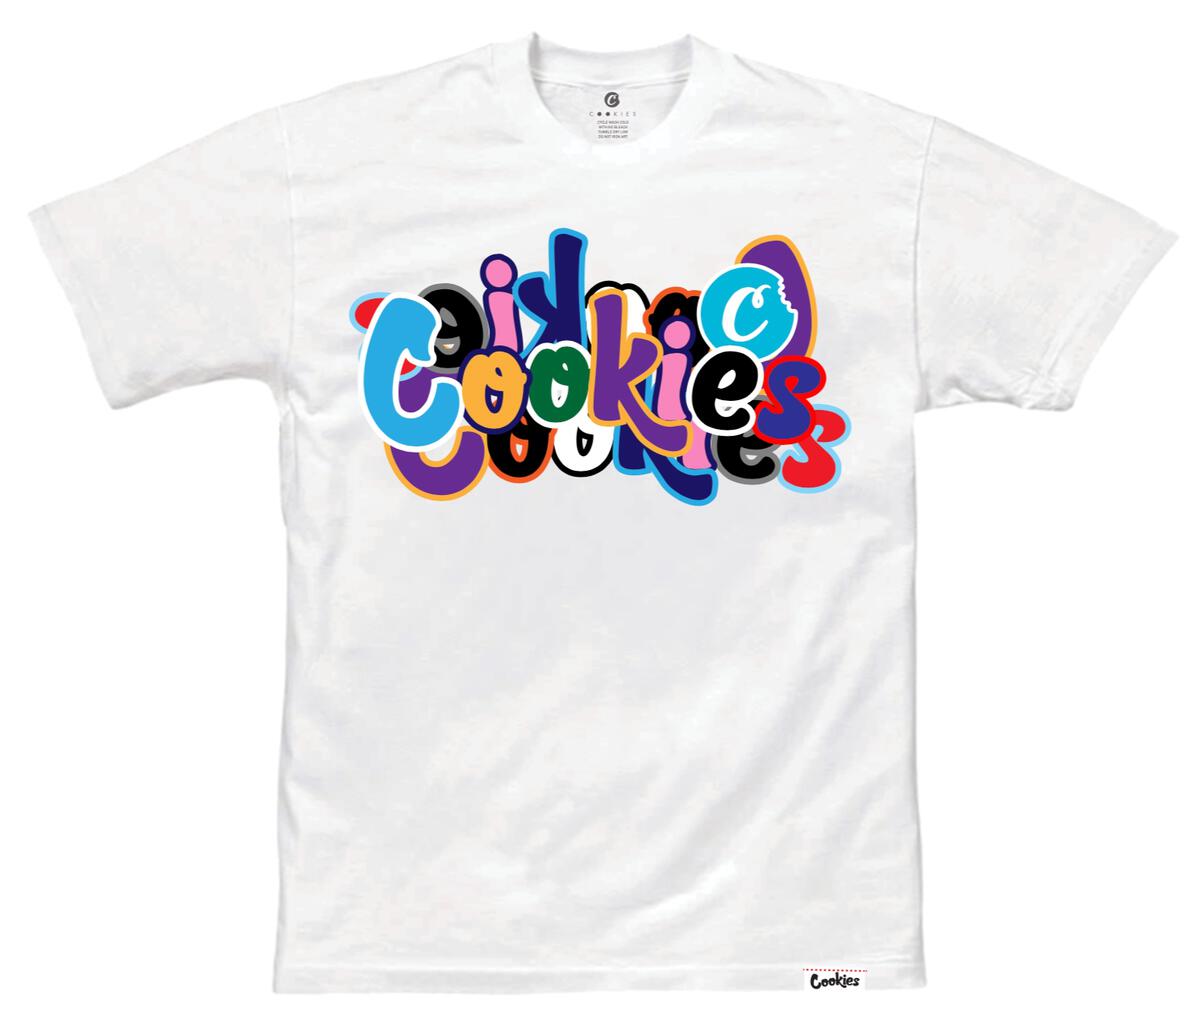 Cookies - Infamous Logo Tee - White - 1560T6031